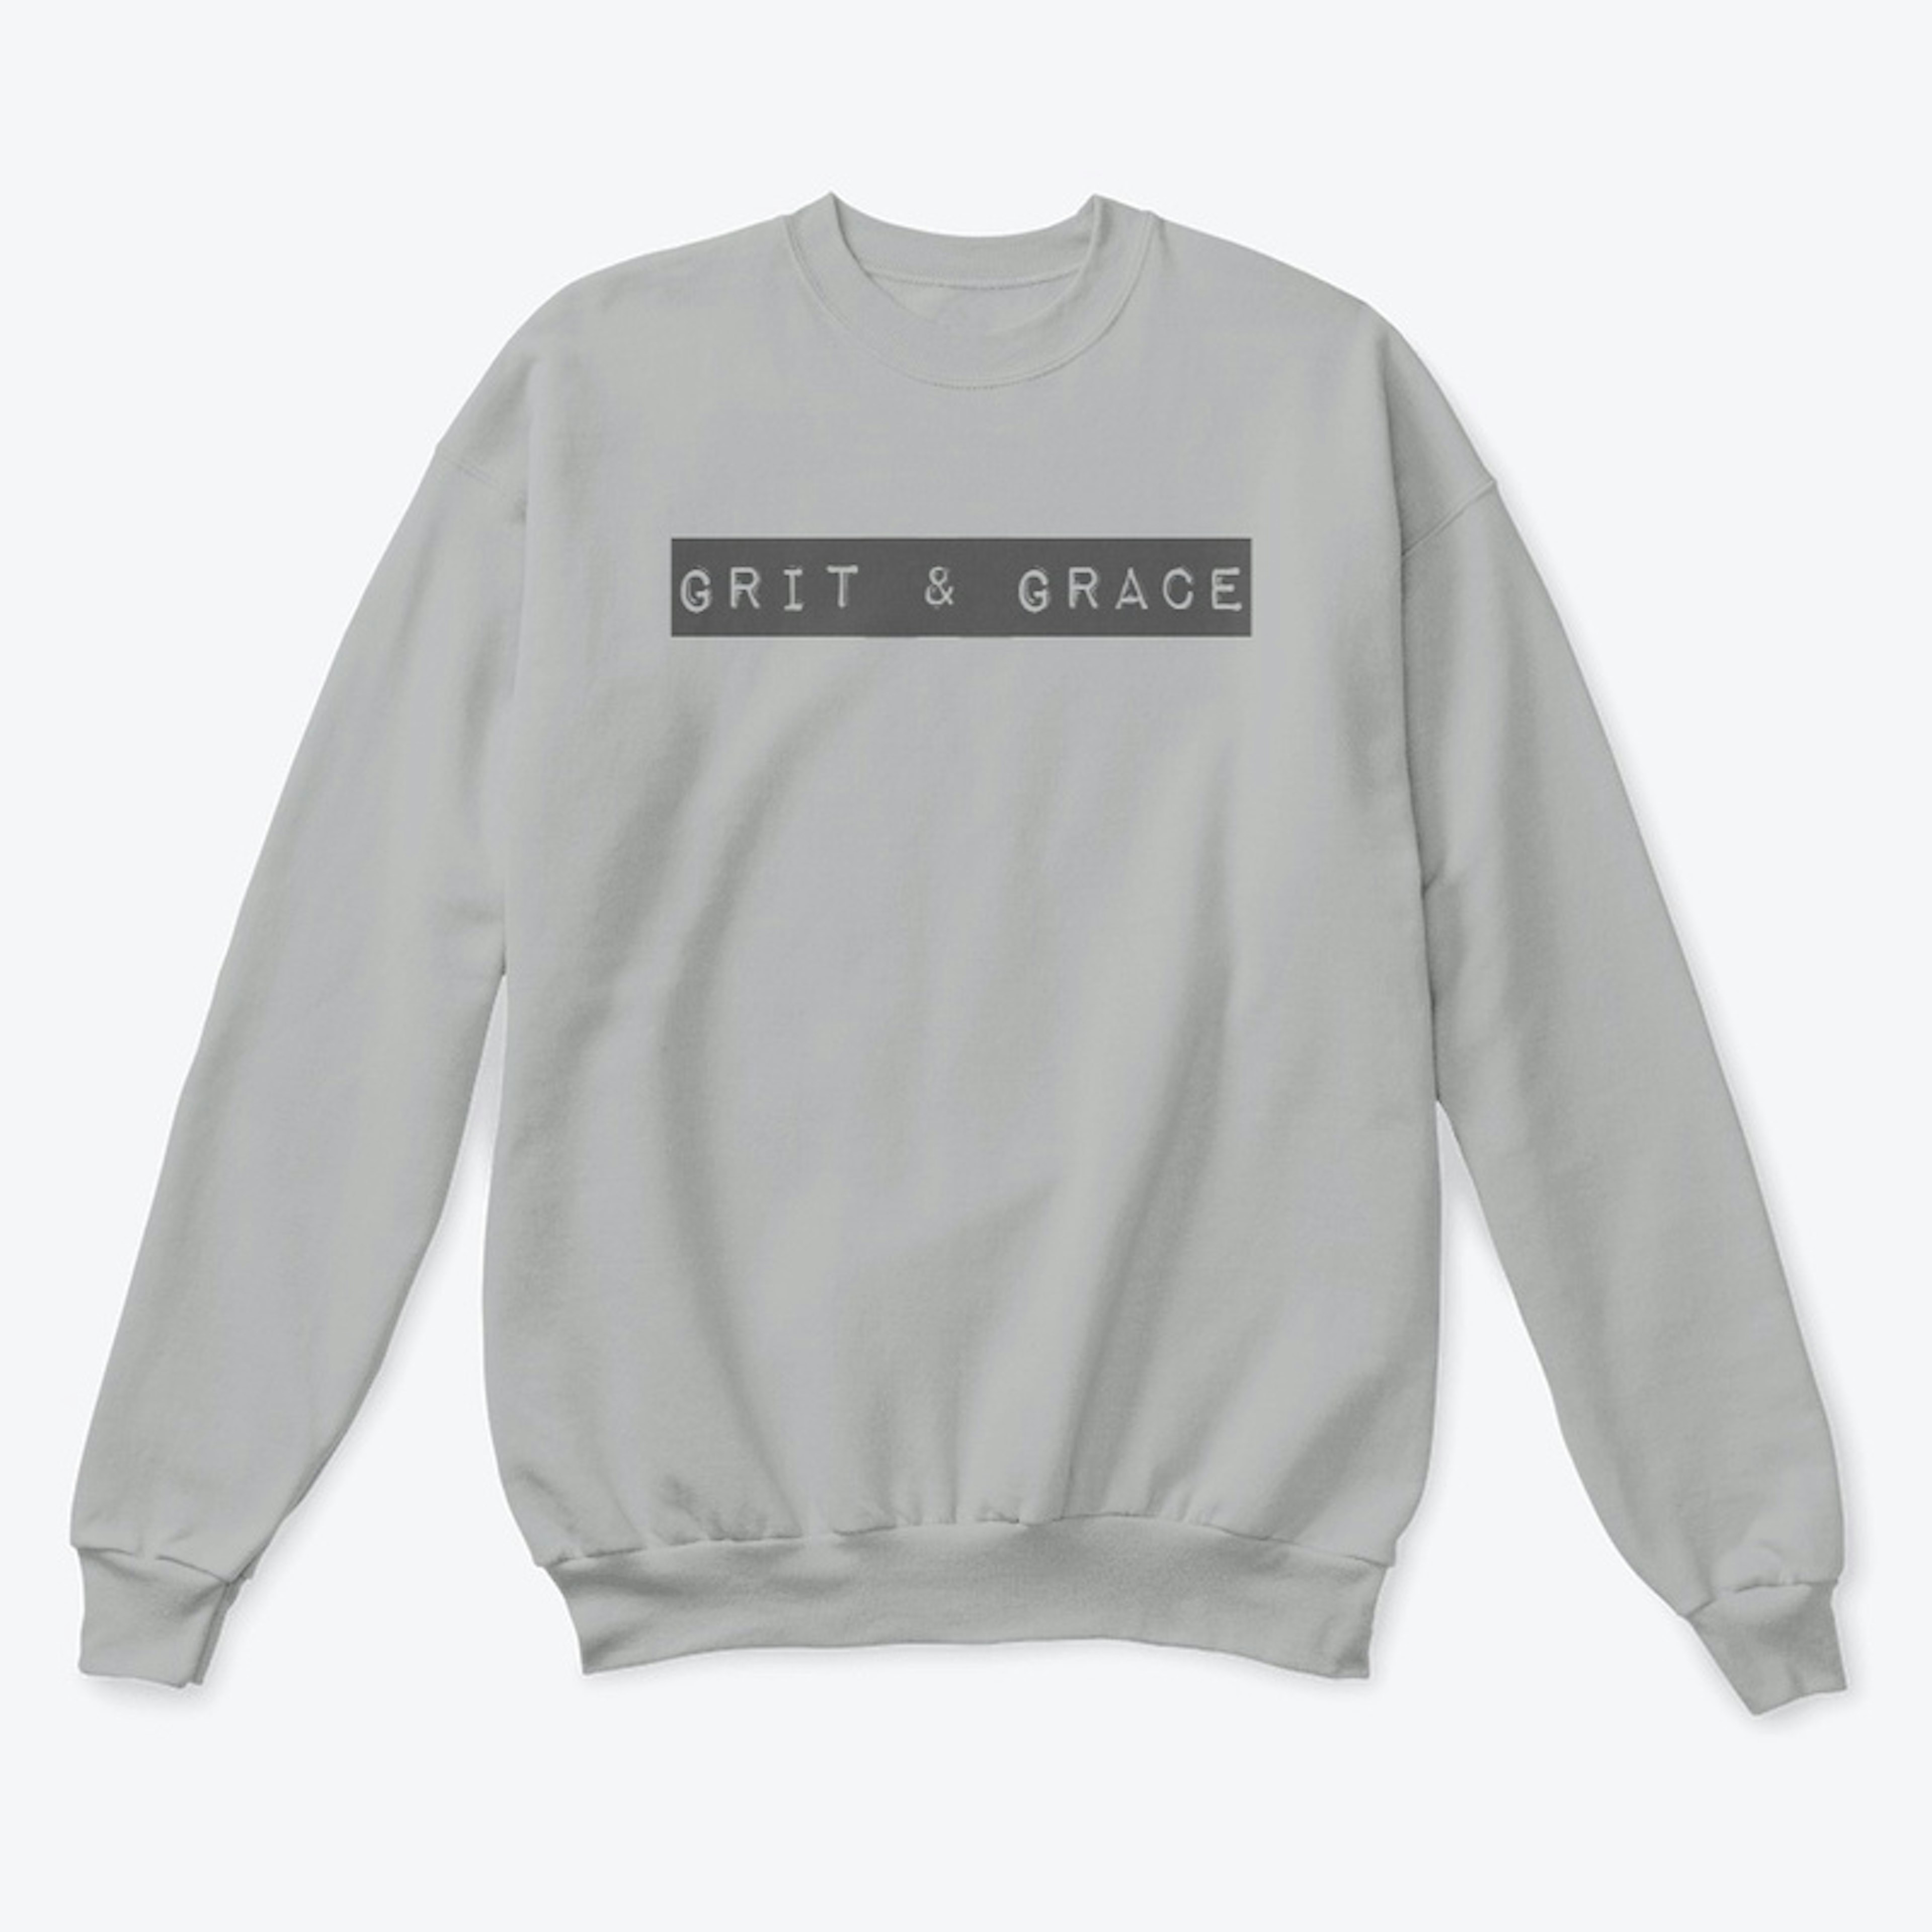 Grit & Grace Crewneck Sweatshirt